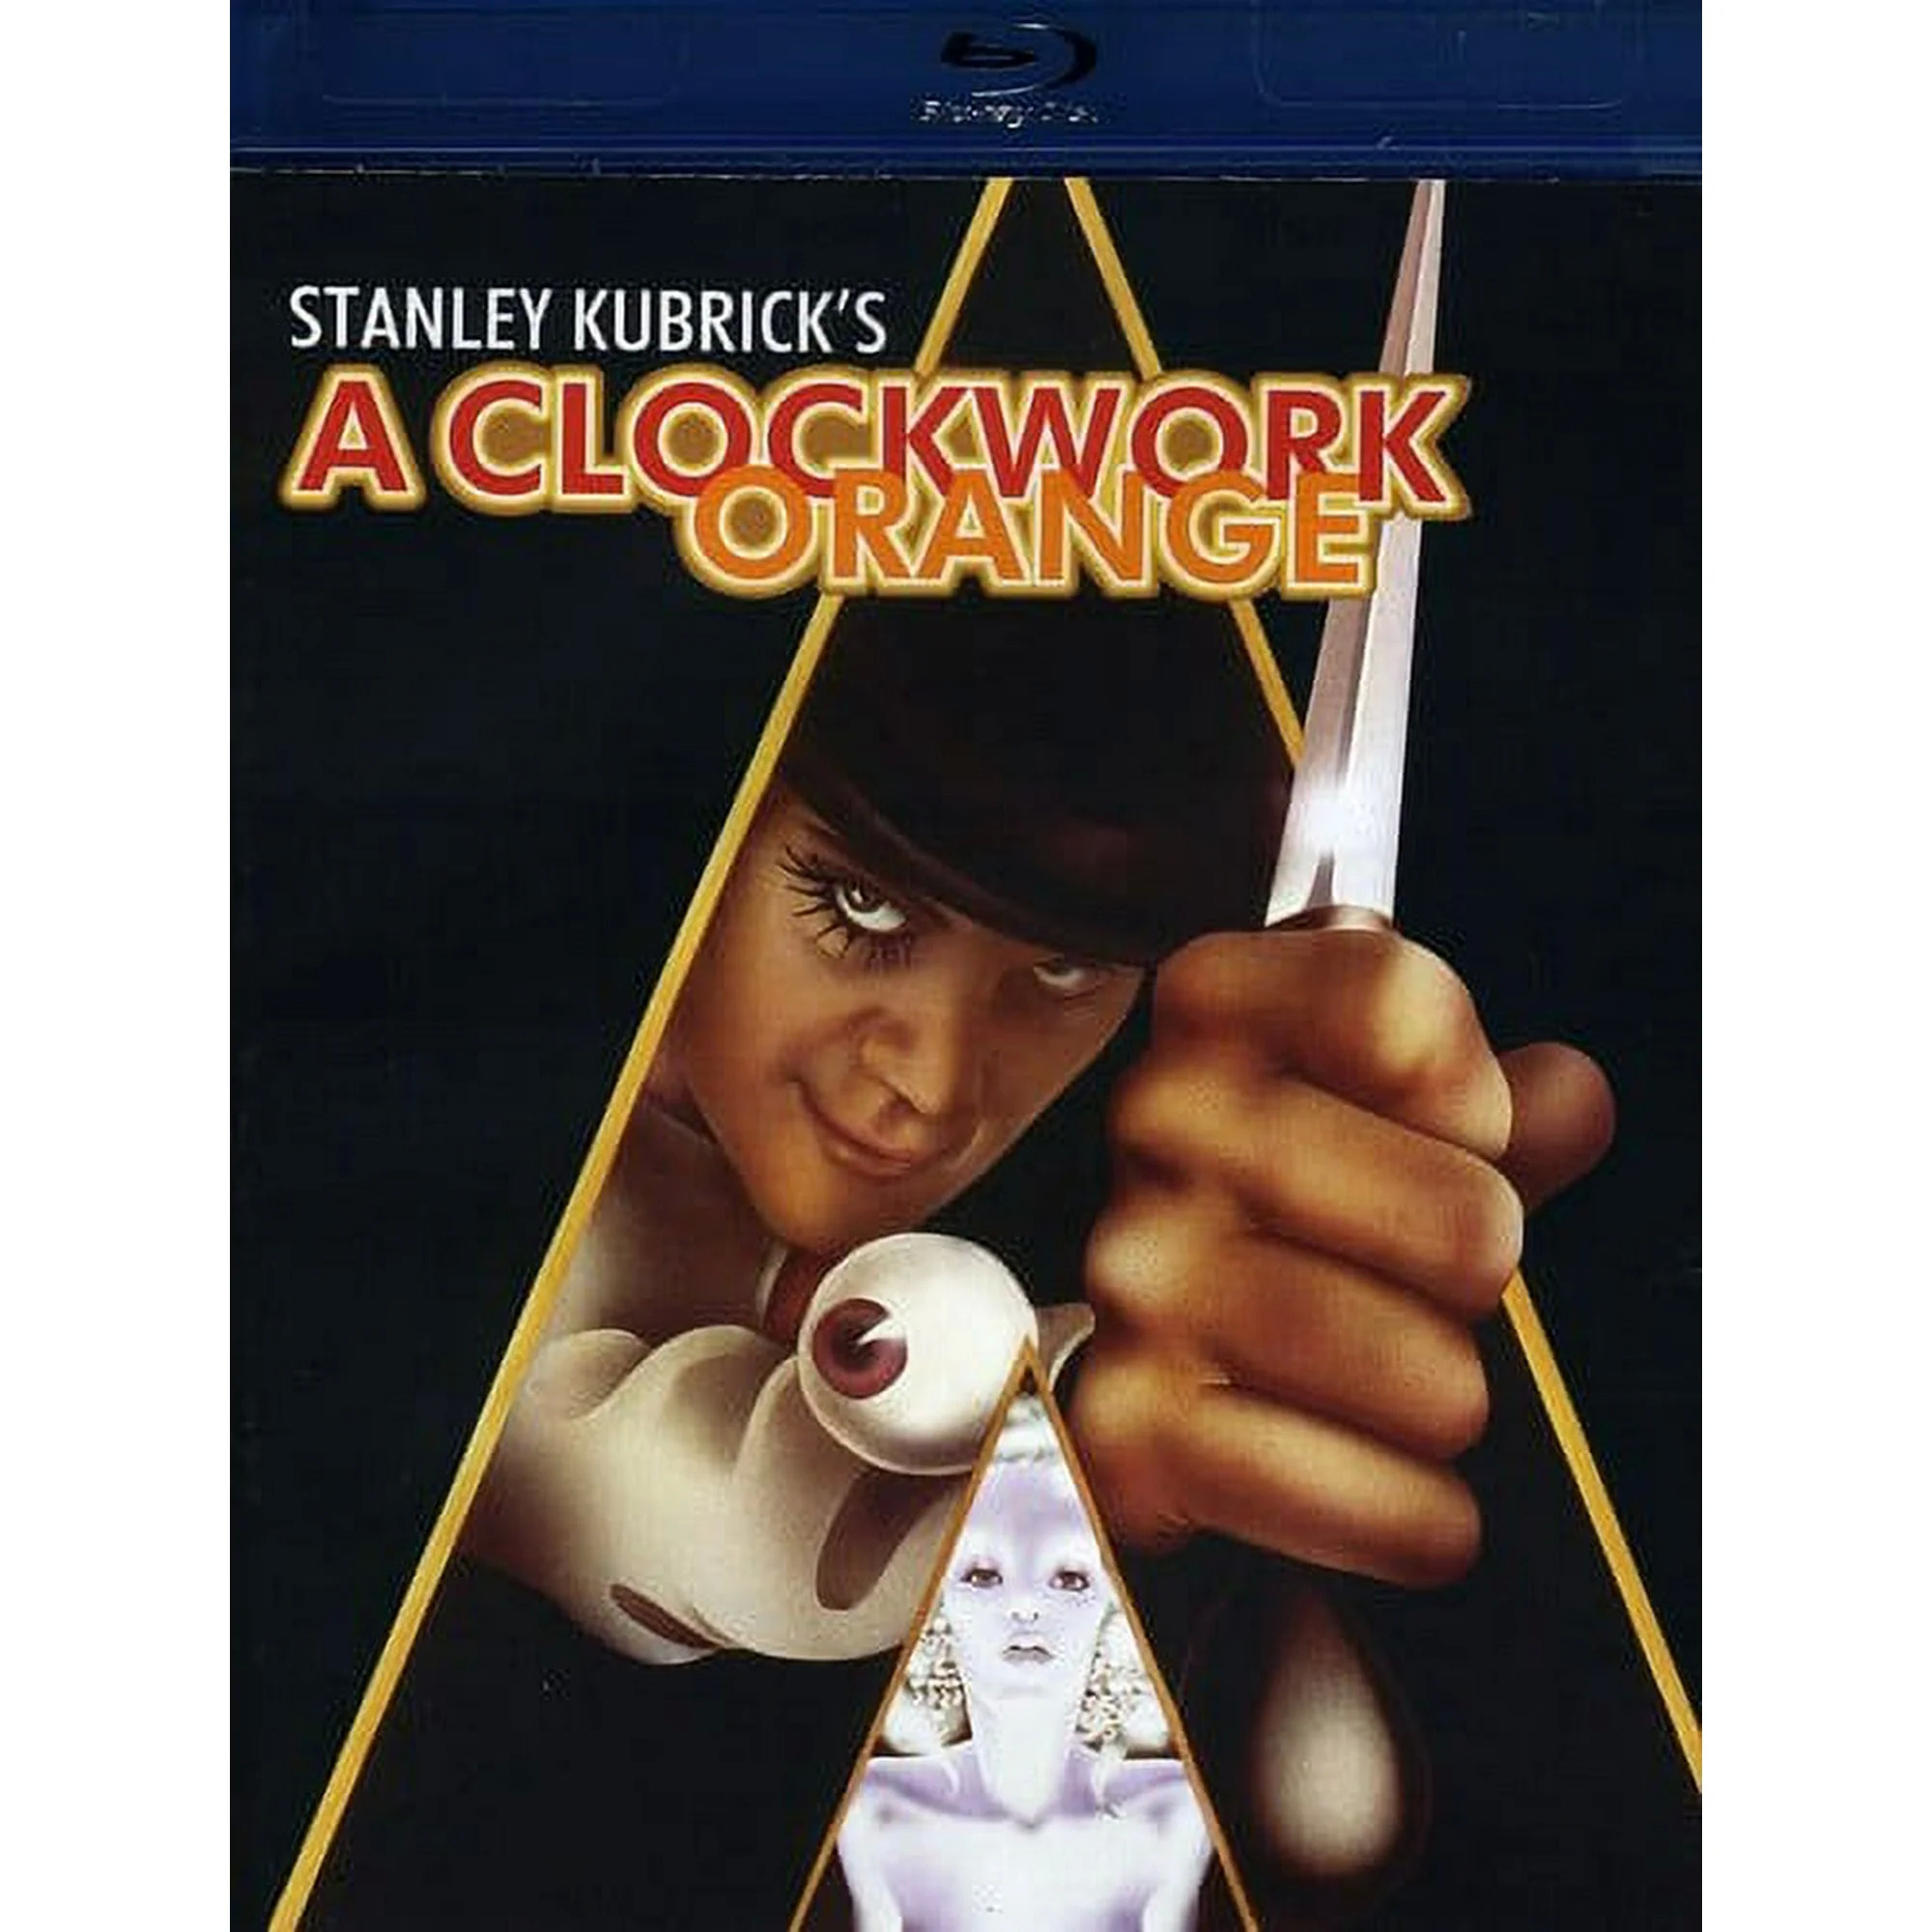 A Clockwork Orange Blu-ray $3.74 Free S H w/ Walmart or $35